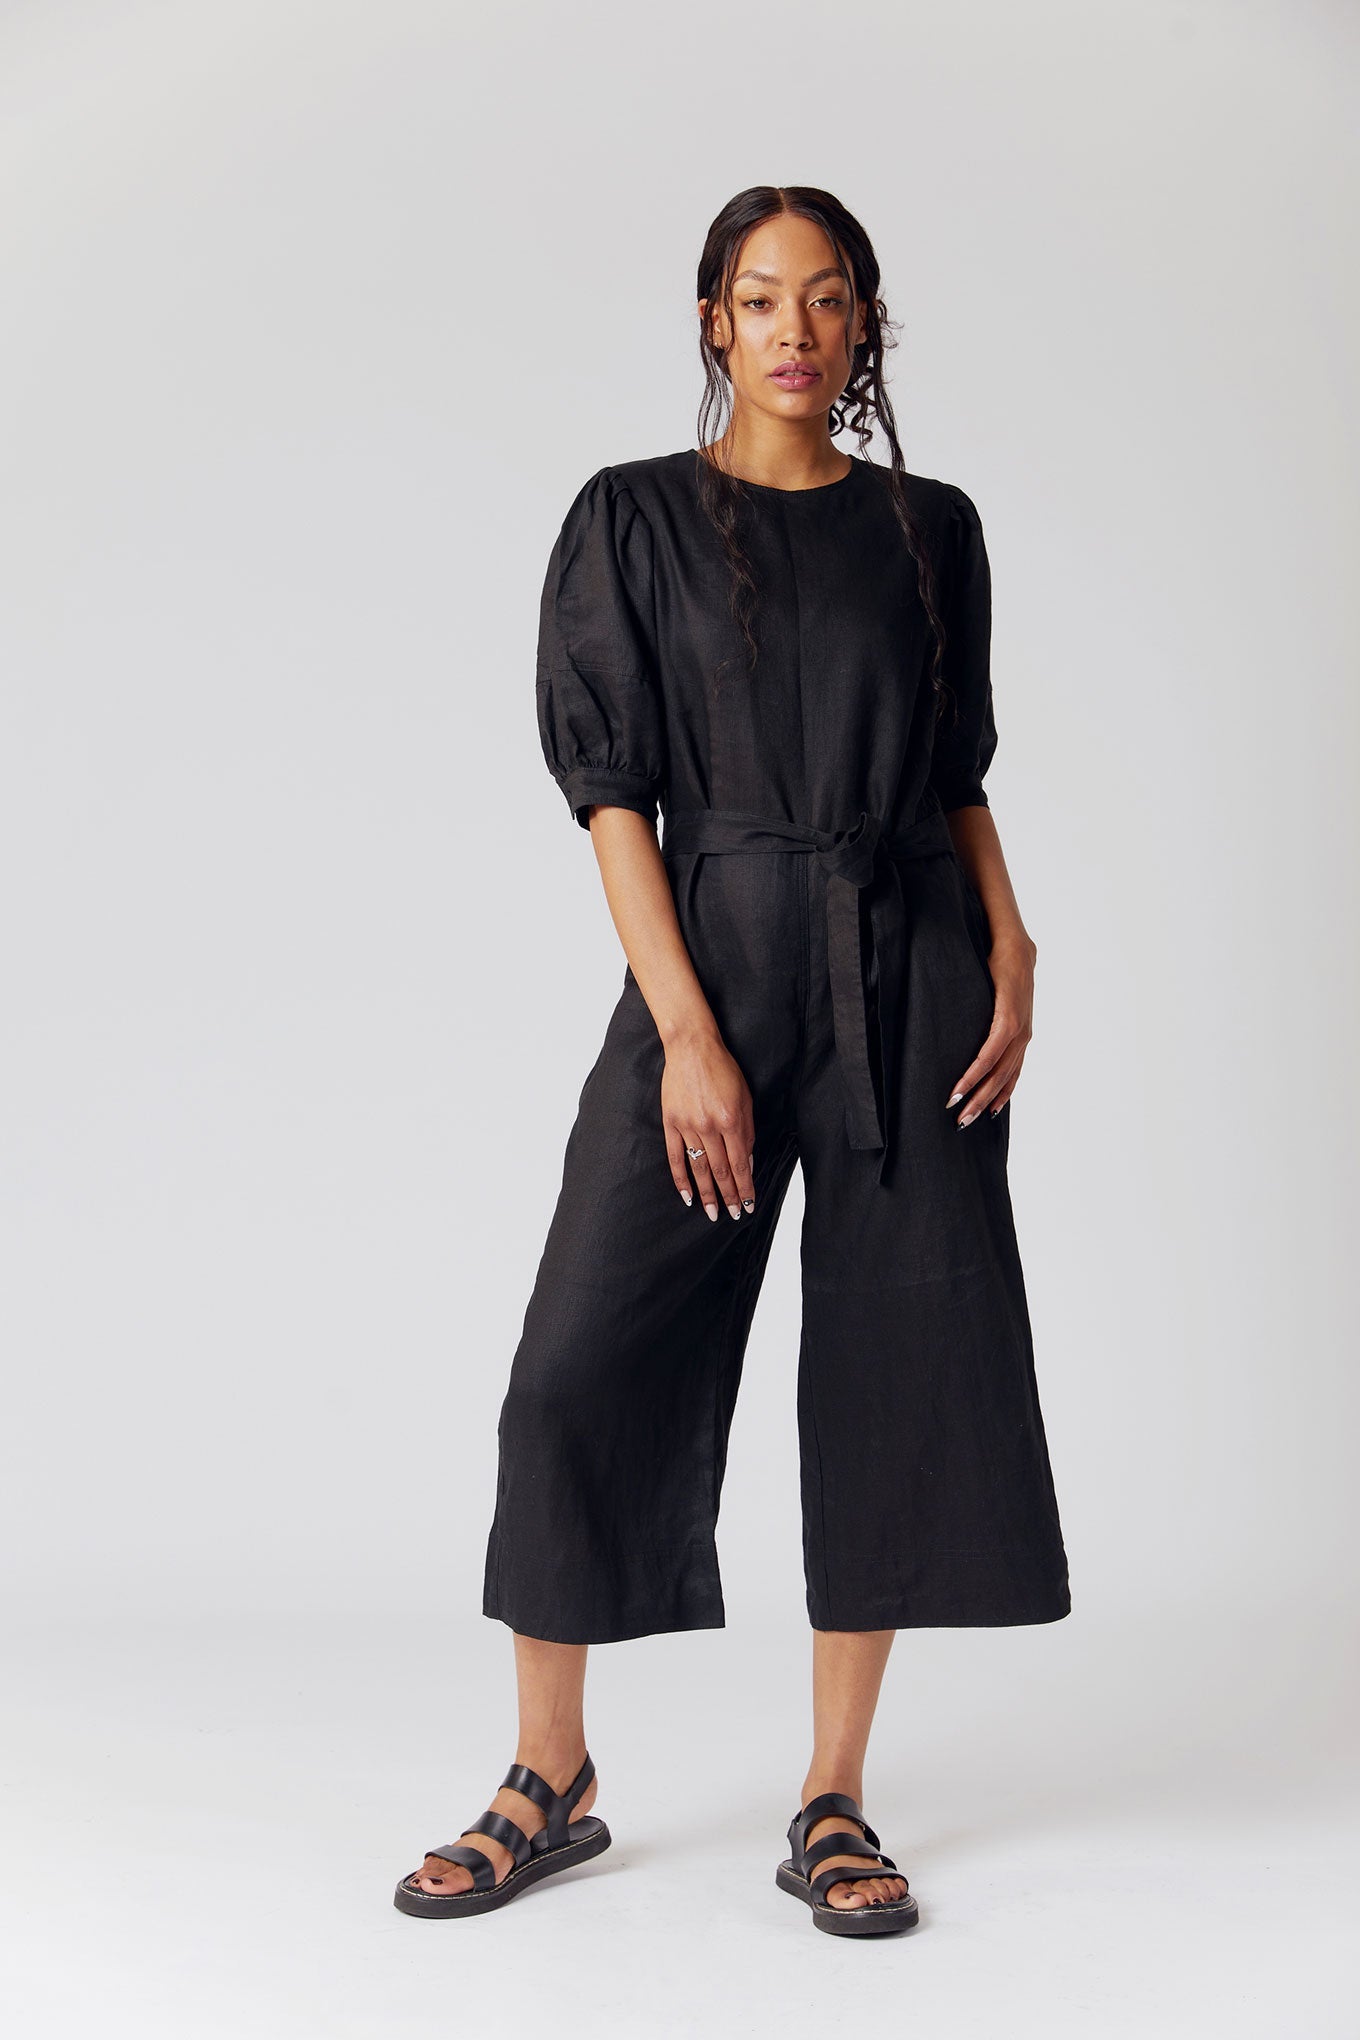 FAYE Organic Linen Jumpsuit Black, SIZE 3 / UK 12 / EUR 40